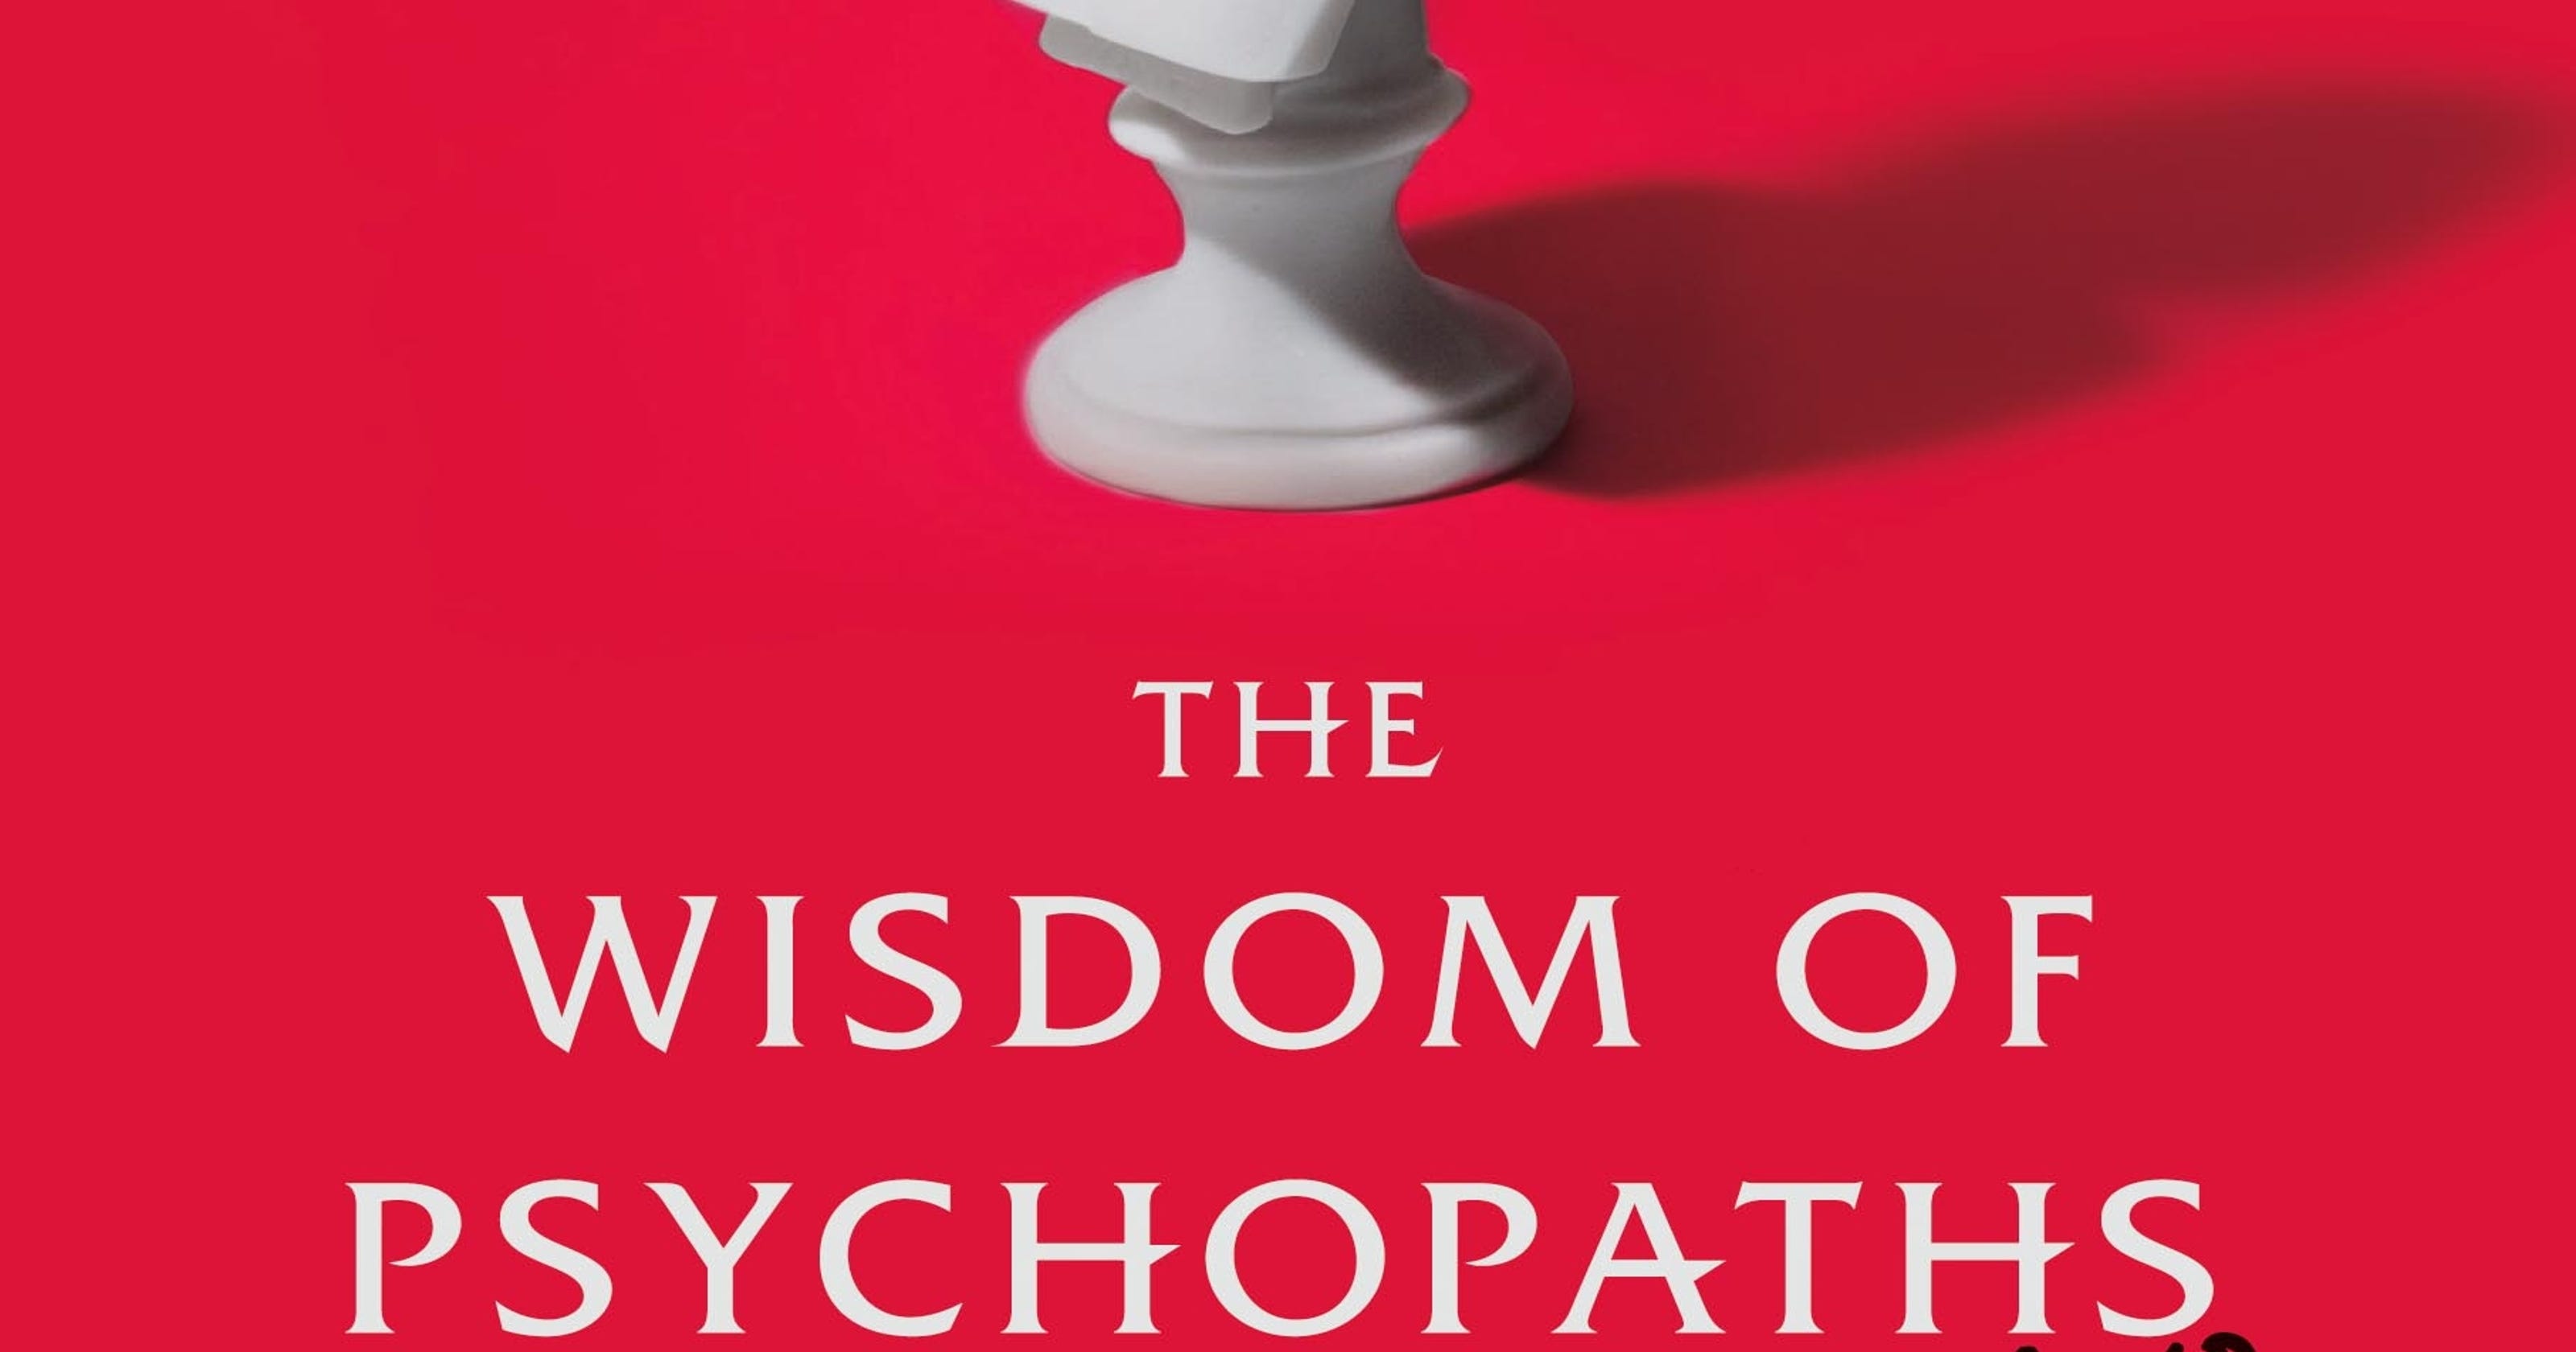 The wisdom of psychopaths pdf download pdf